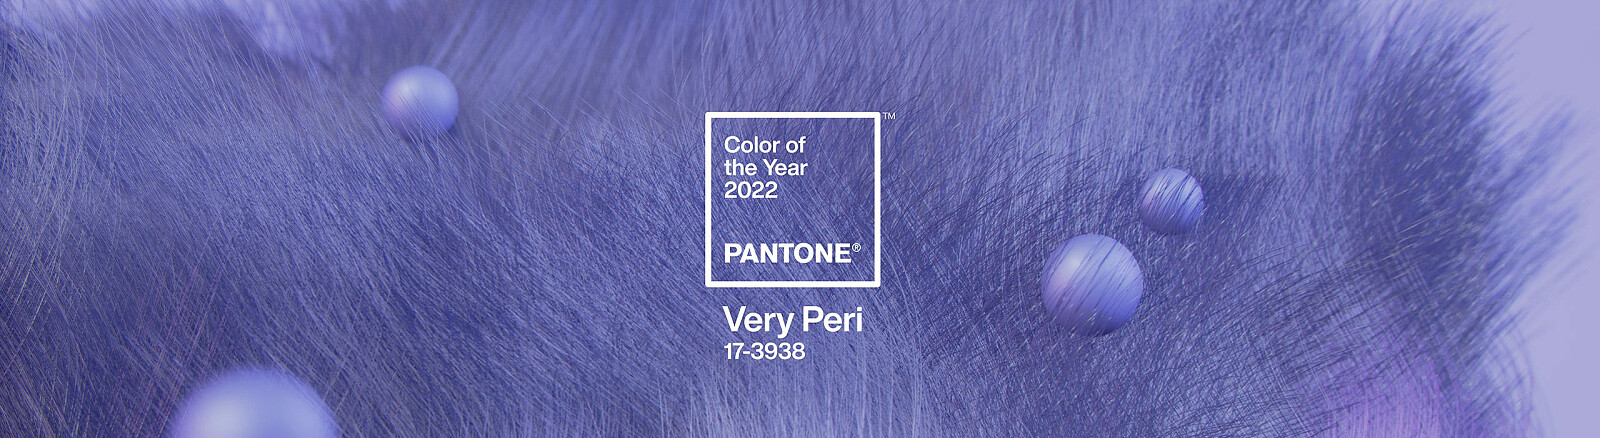 pantone-color-of-the-year-2022-very-peri-banner.jpg [319.44 KB]